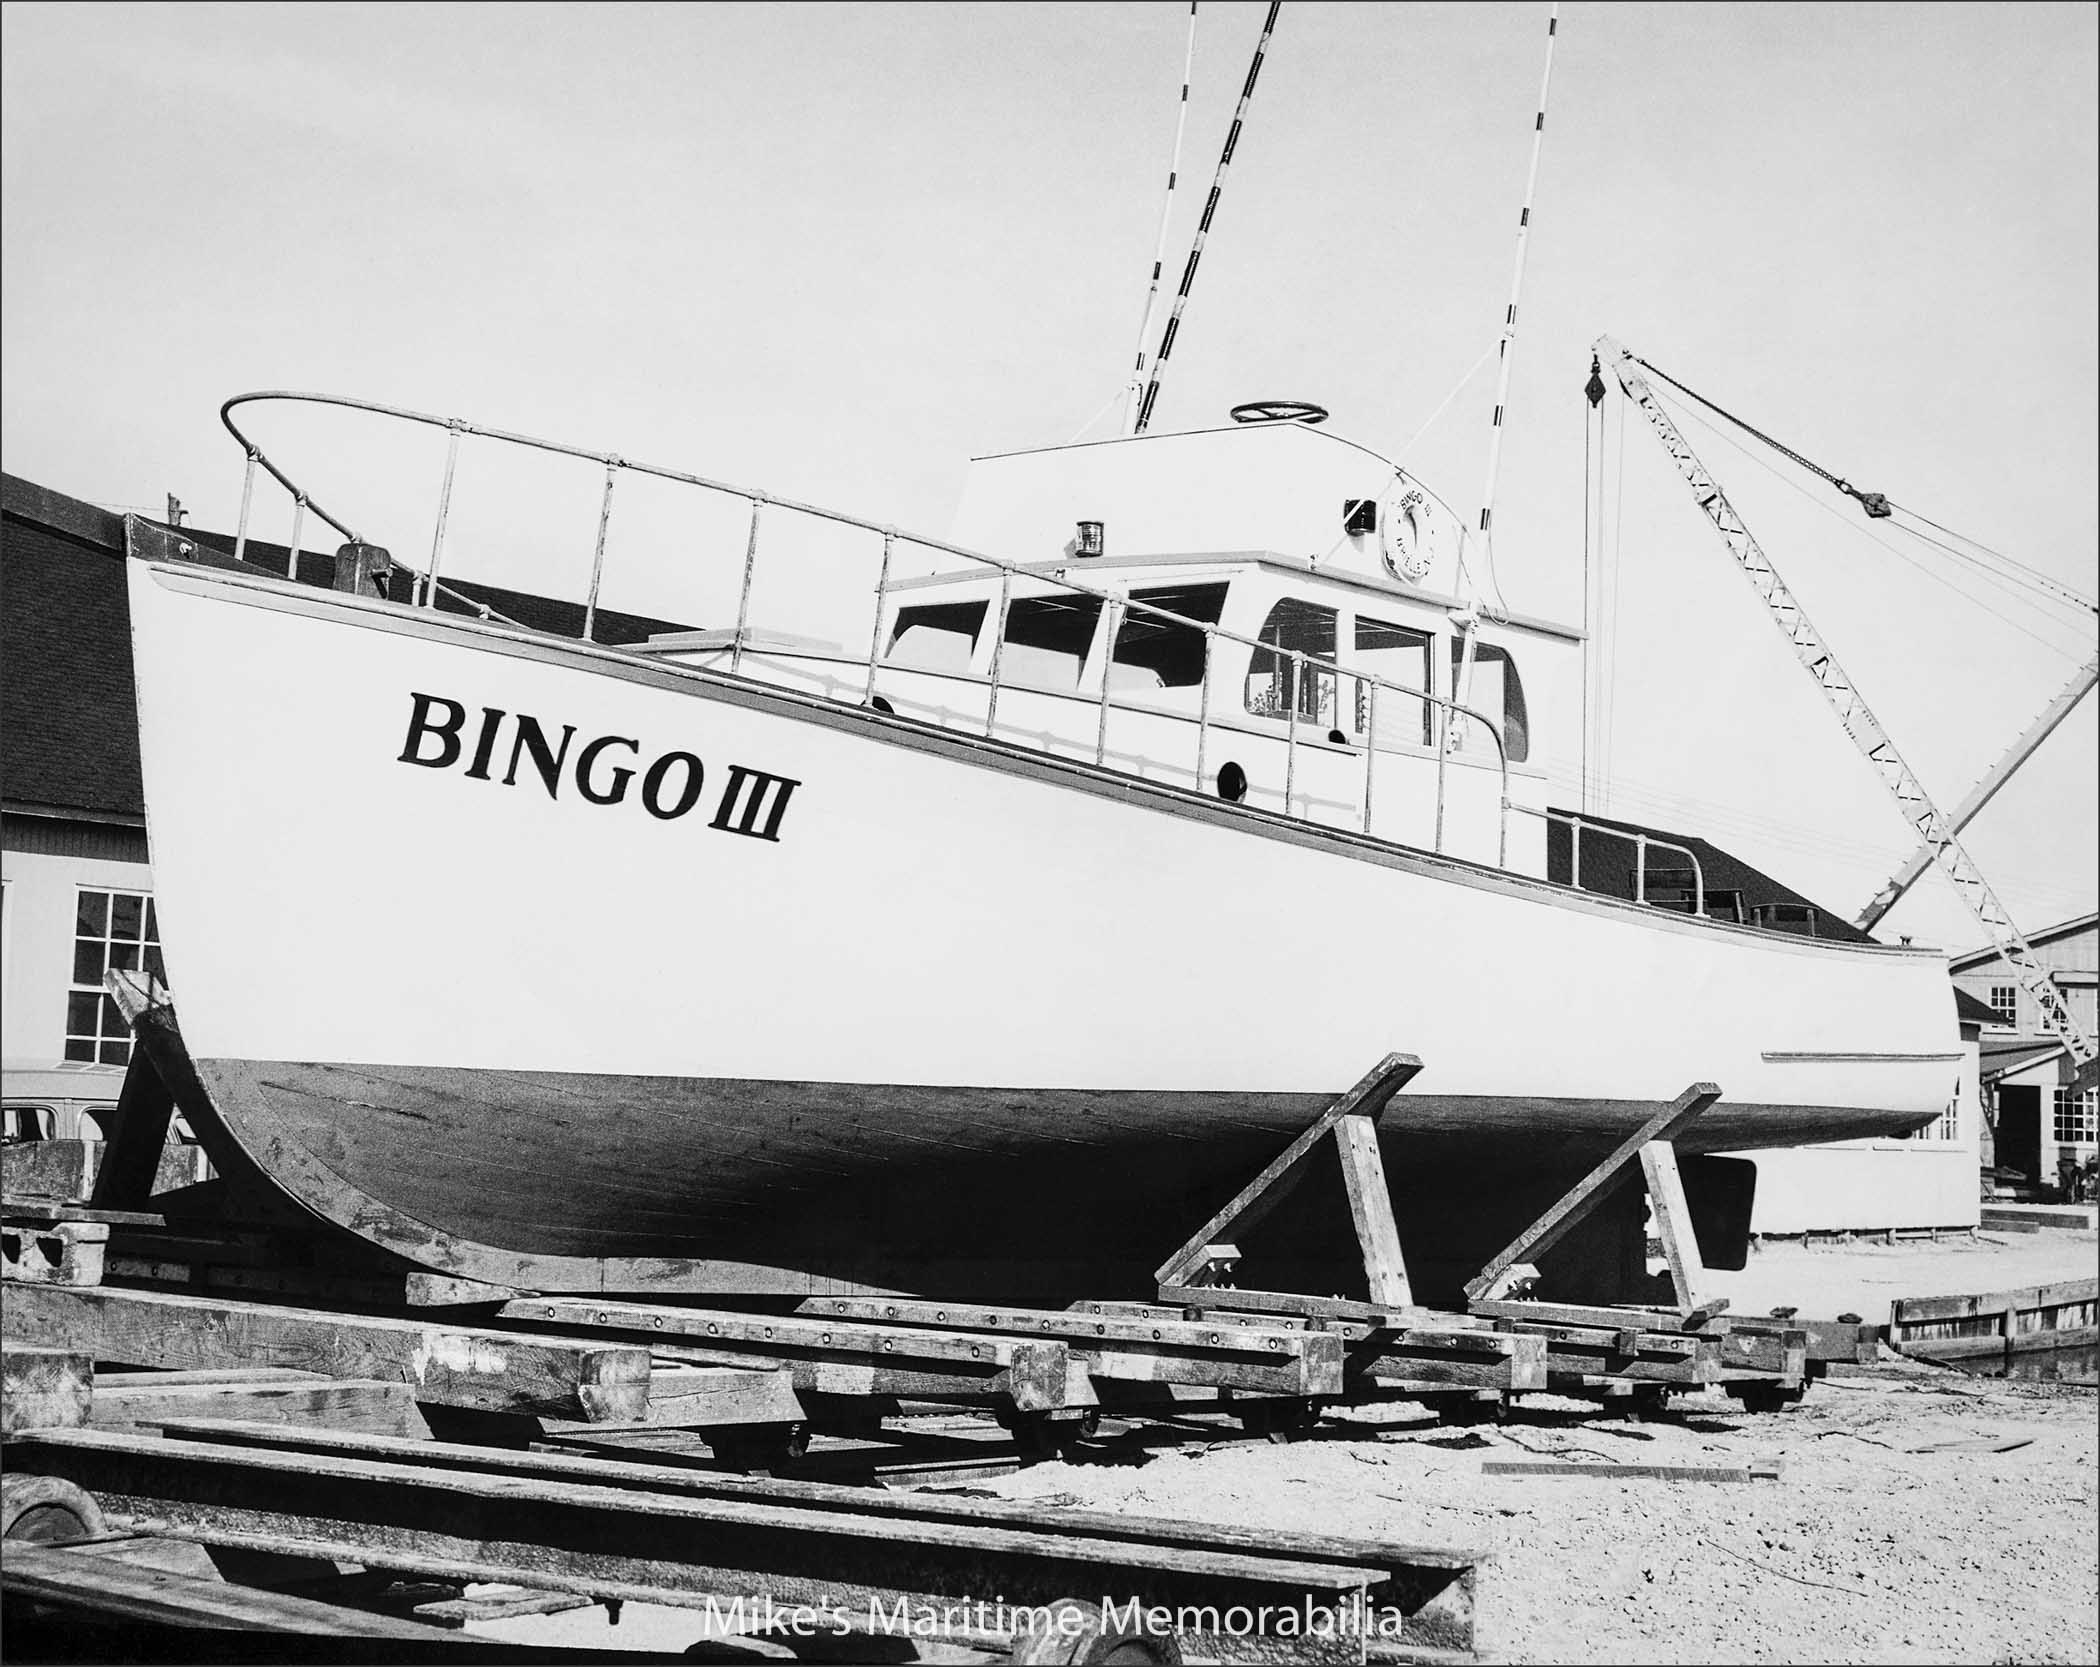 BINGO III, Brielle, NJ – 1950 Captain Knute Lovgren's "BINGO III" from Brielle, NJ circa 1950. The "BINGO III" was built in 1948 at Rockland, ME. Photo courtesy of Tom Olsen.